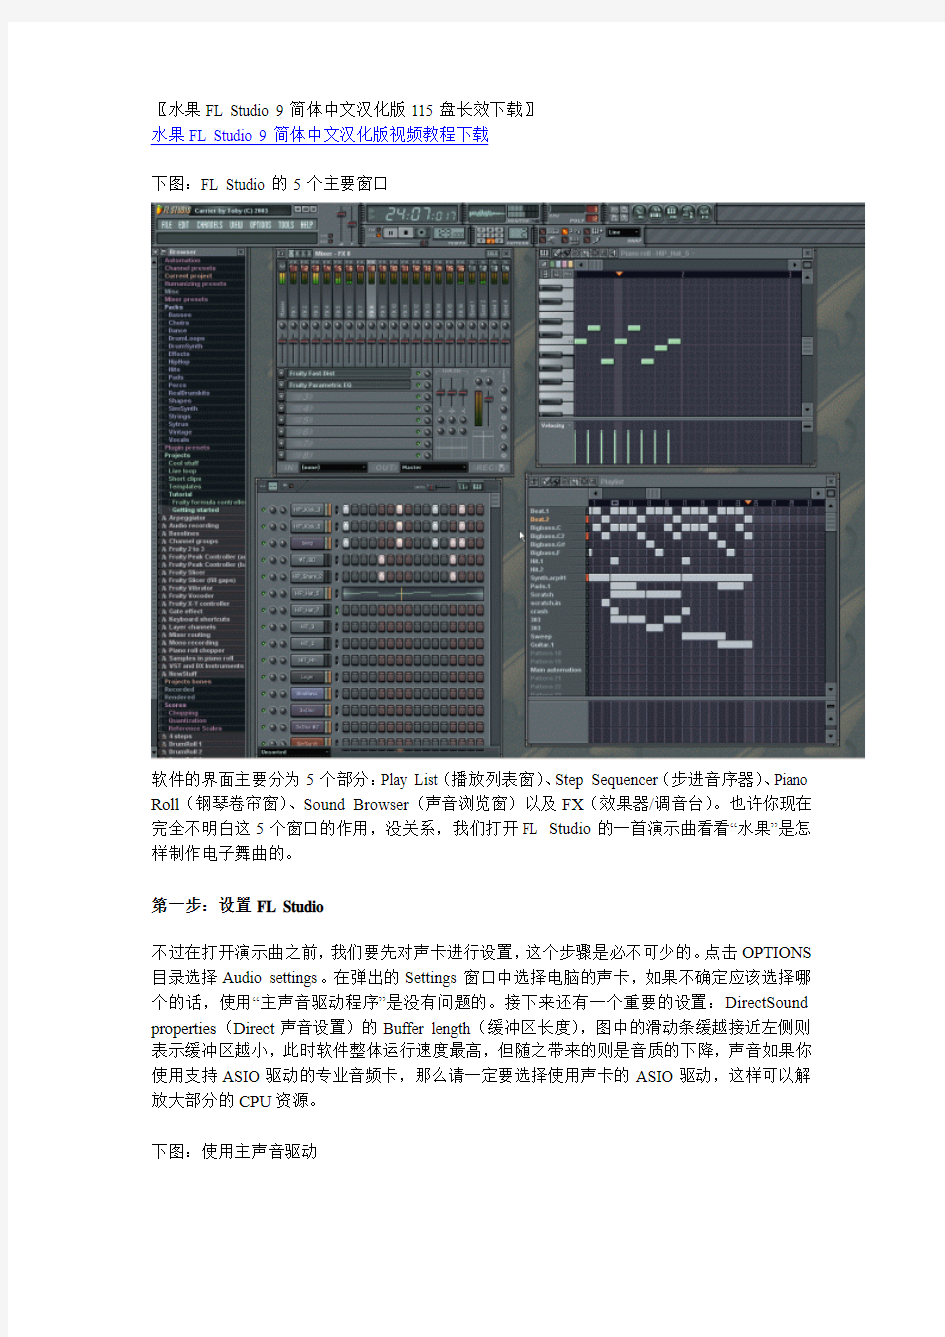 FL Studio 9 基础设置和简单舞曲制作中文教程